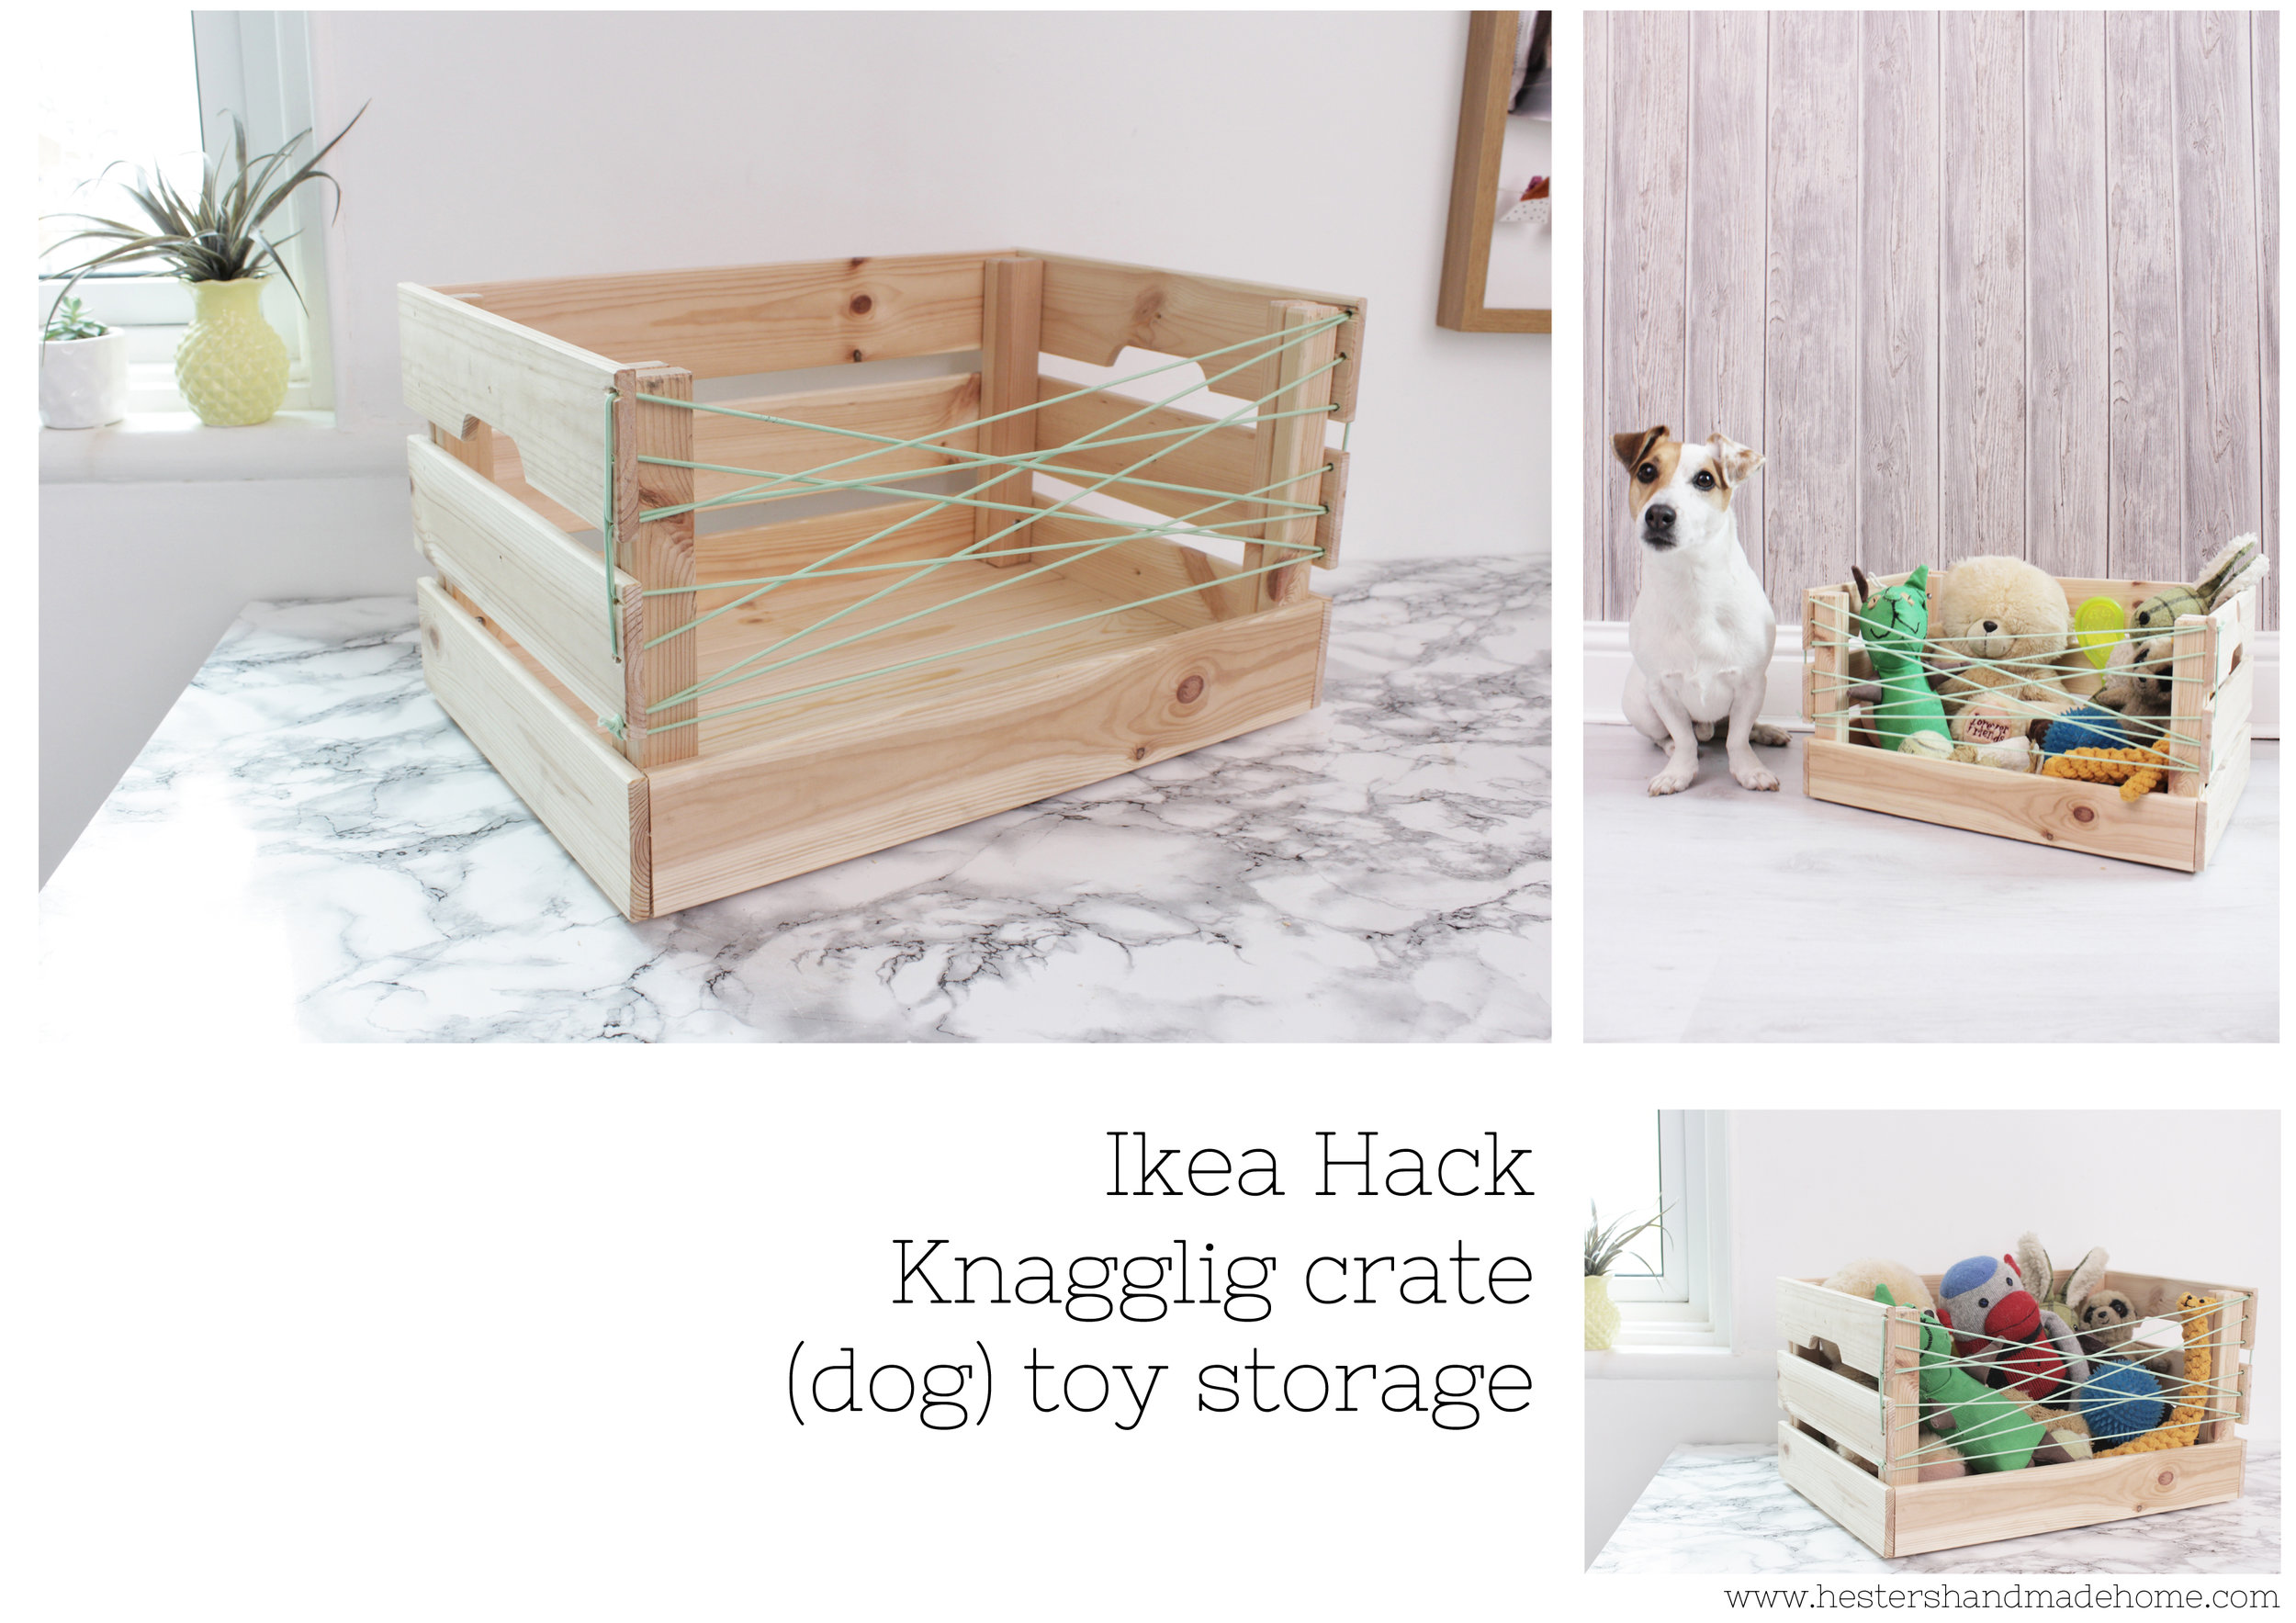 https://images.squarespace-cdn.com/content/v1/52b0413de4b0c8fba4ecefa2/1510911824529-XHK4ZIOL4WBLLT3ZKGF7/Ikea+hack+wooden+crate+Knagglig+to+toy+storage+tutorial+by+www.hestershandmadehome.com